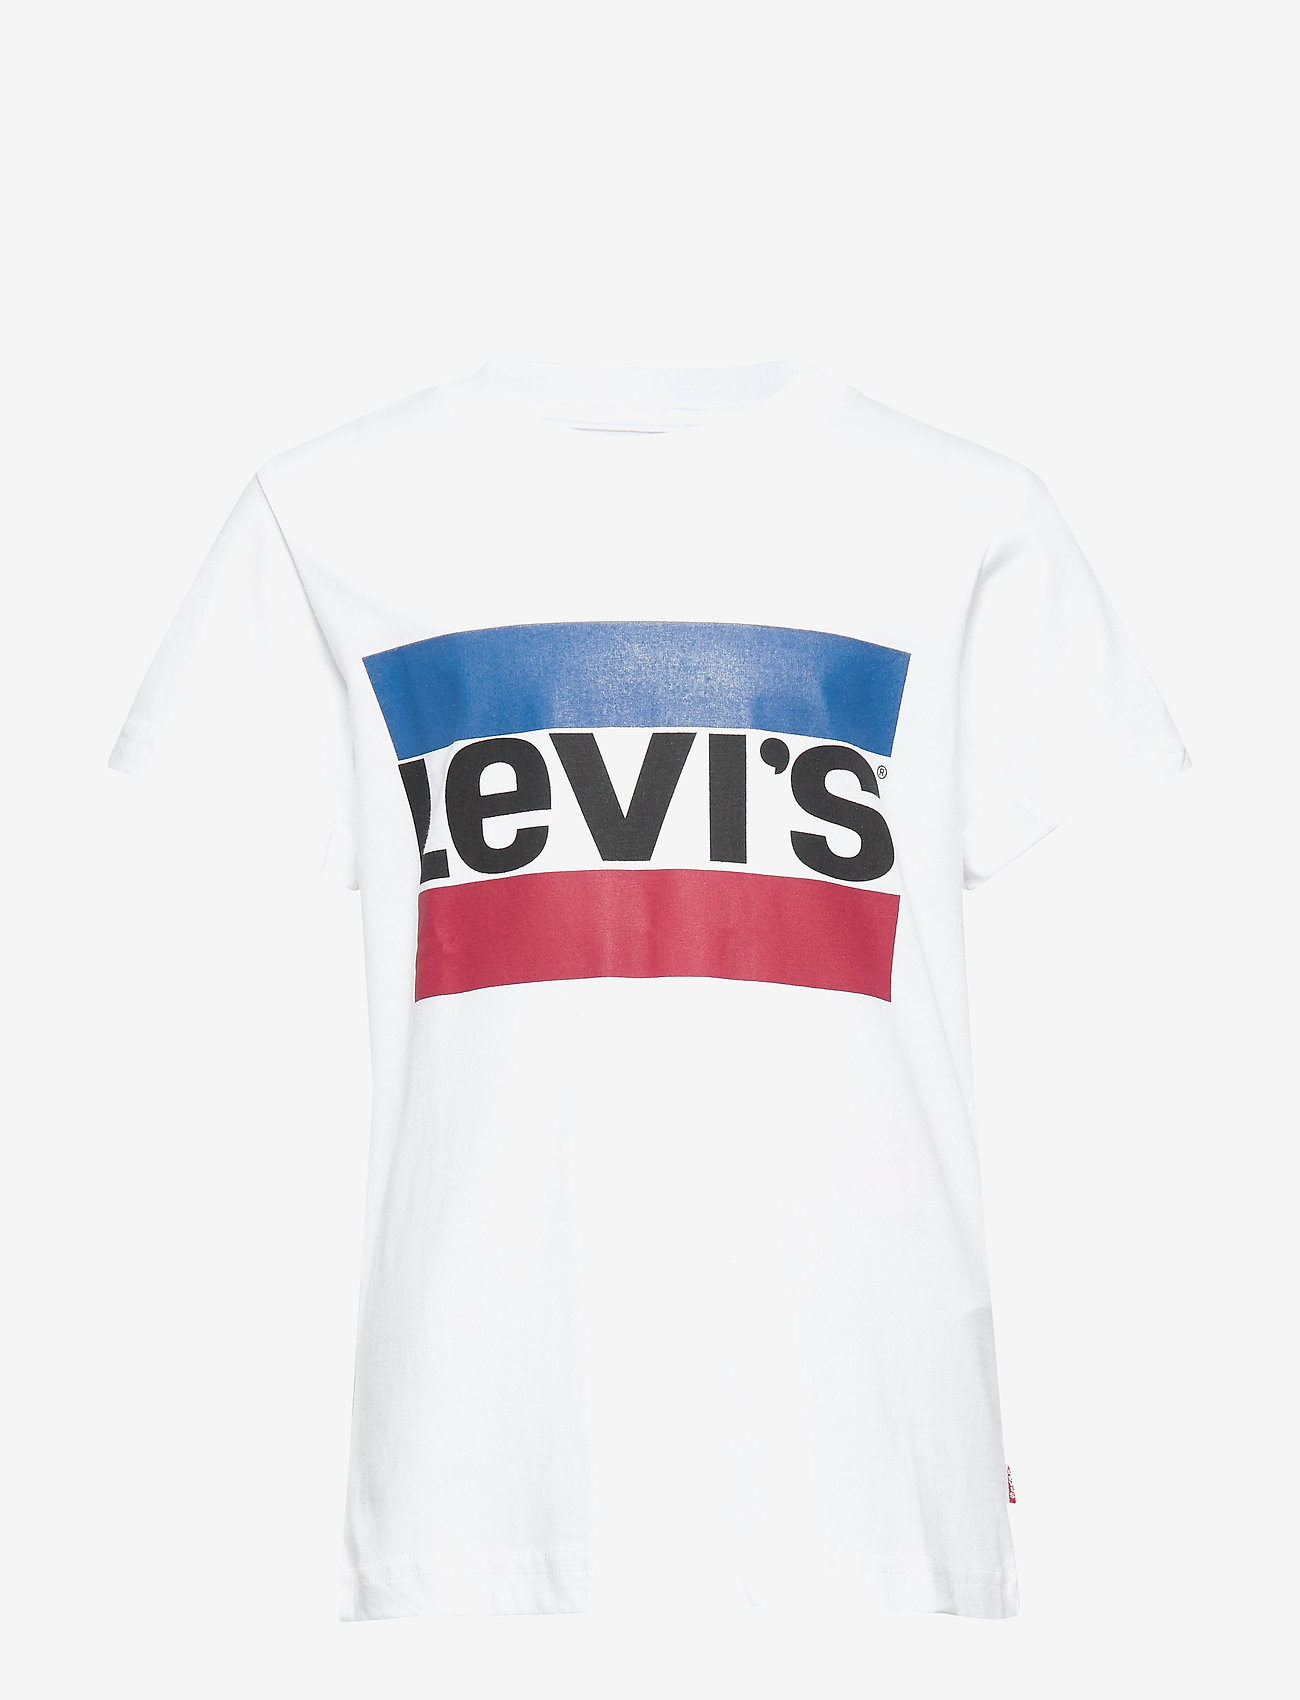 Levi's - Levi's® Long Sleeve Graphic Tee Shirt - kortermede t-skjorter - transparent - 0